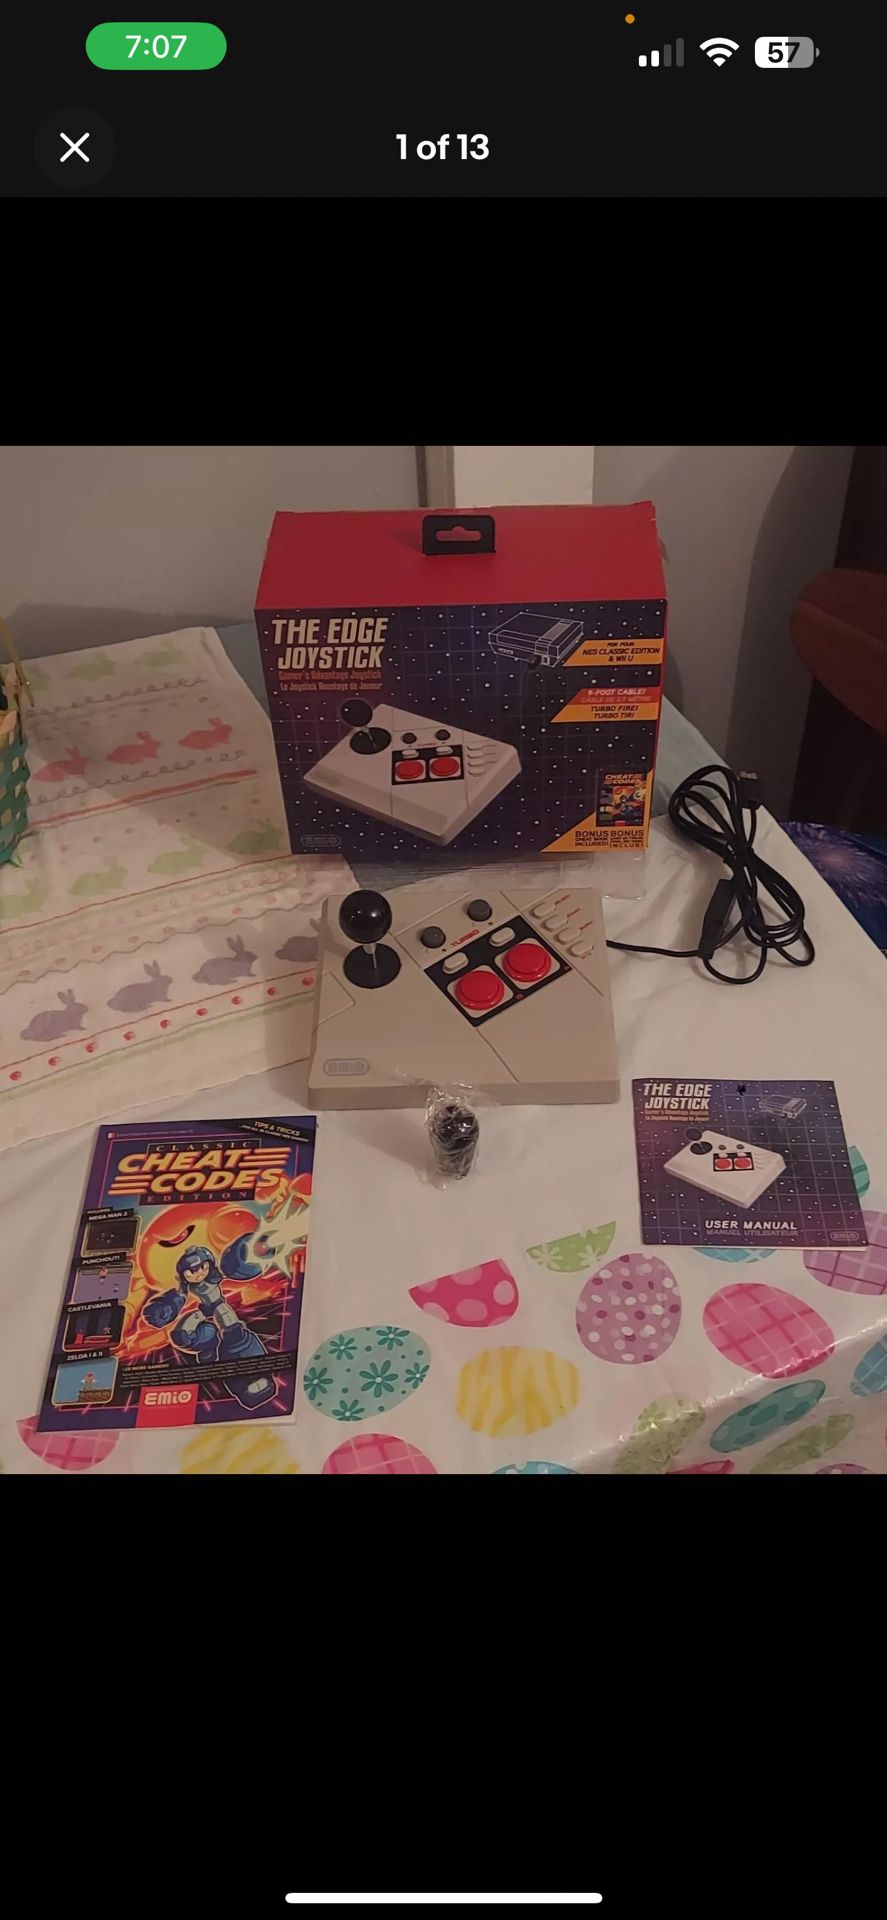 The Edge Joystick Arcade Joystick Nintendo NES Classic Edition & Wii U